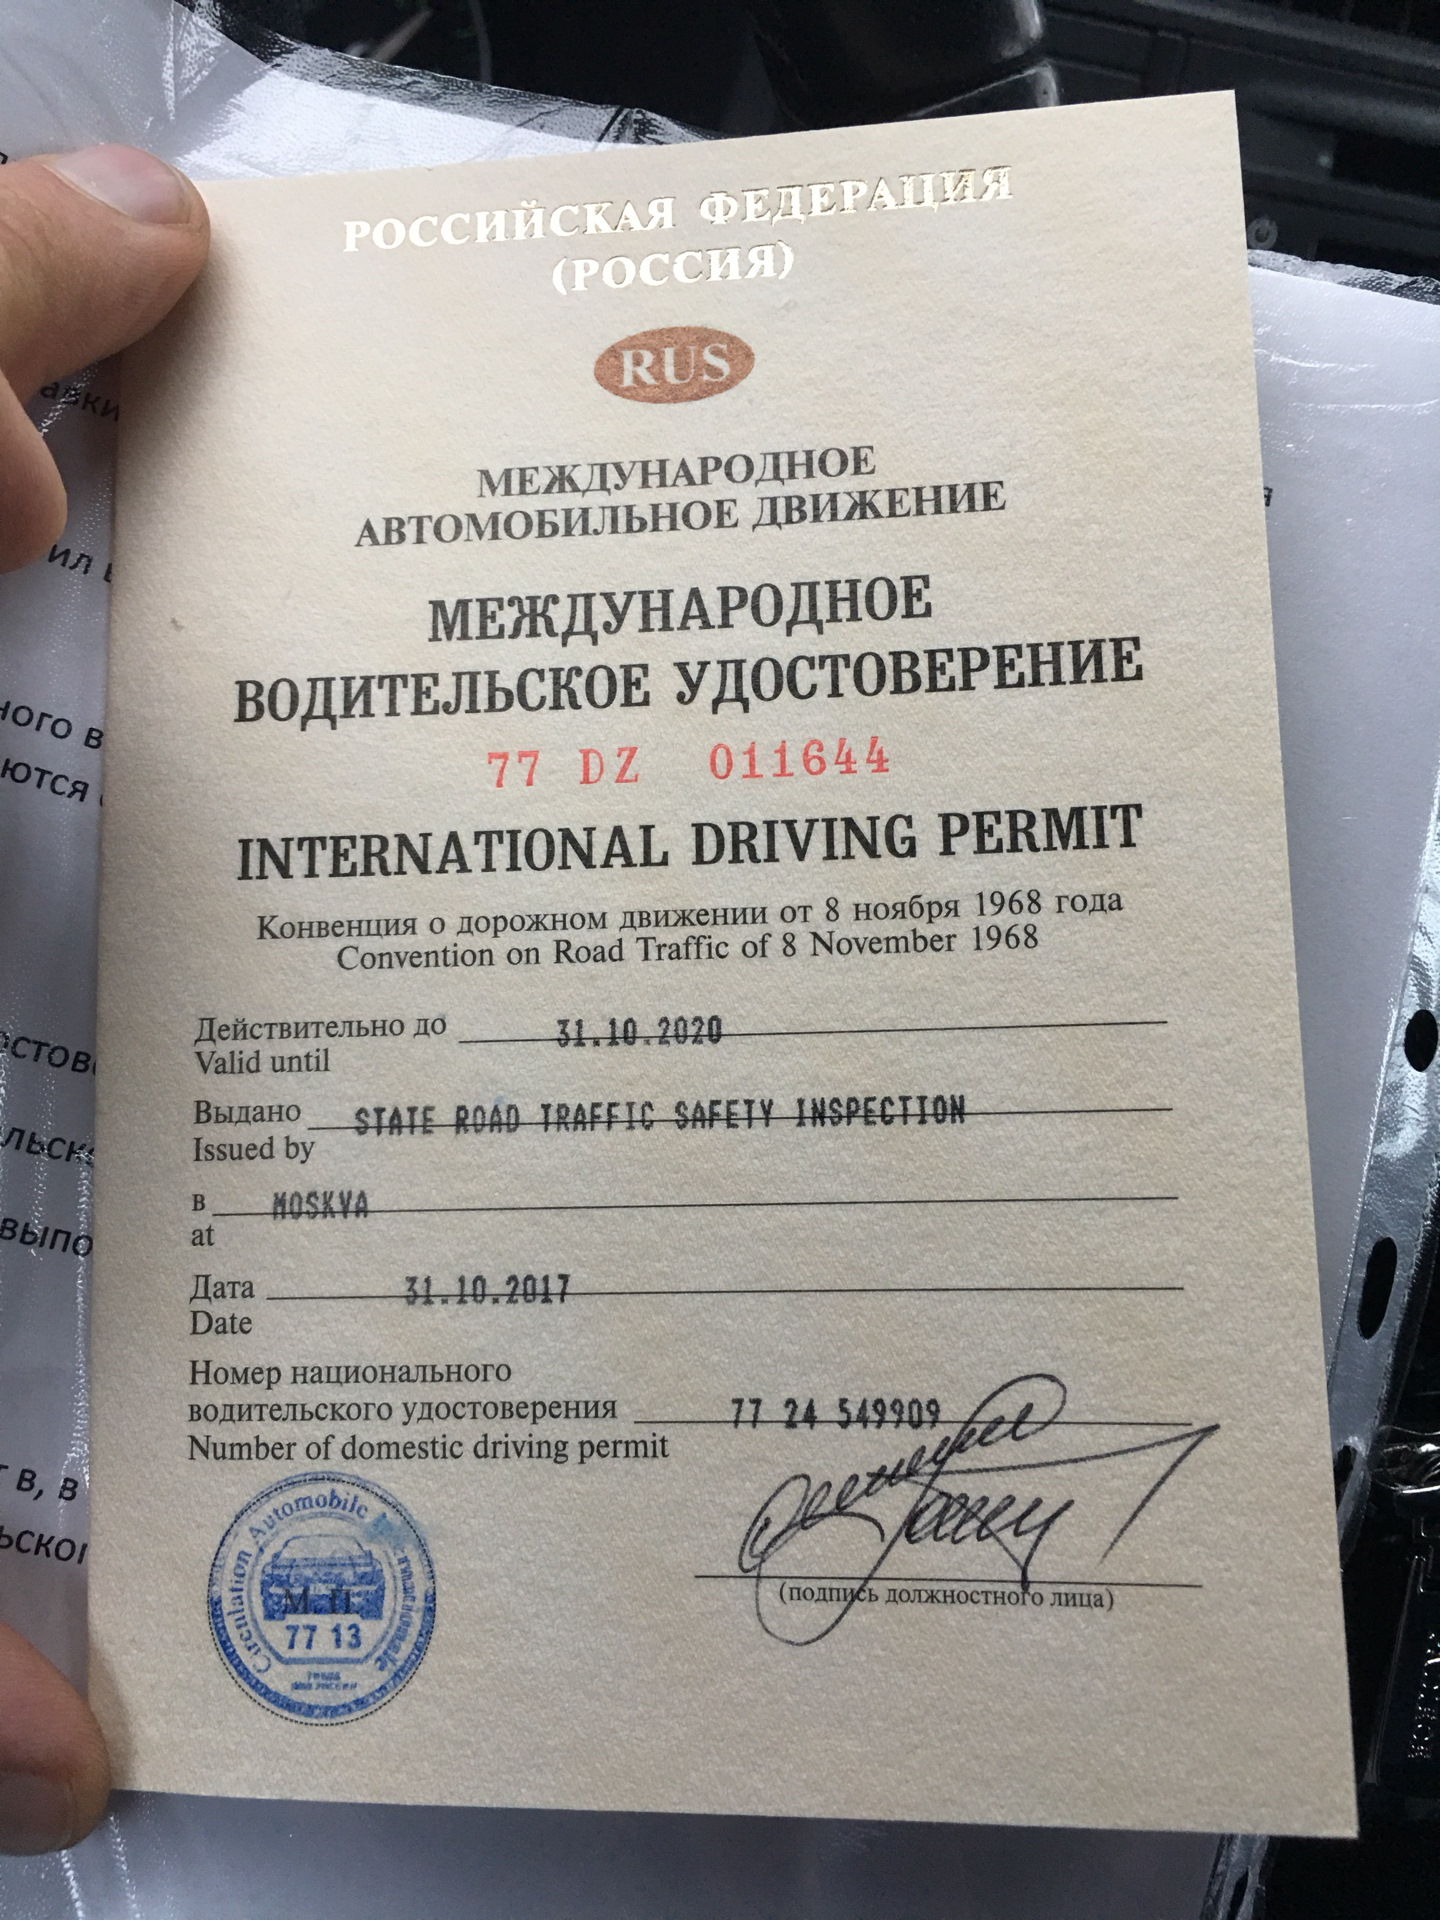 Замена прав на международные. Международное водительское УДО. Международных водительских удостоверений (МВУ).